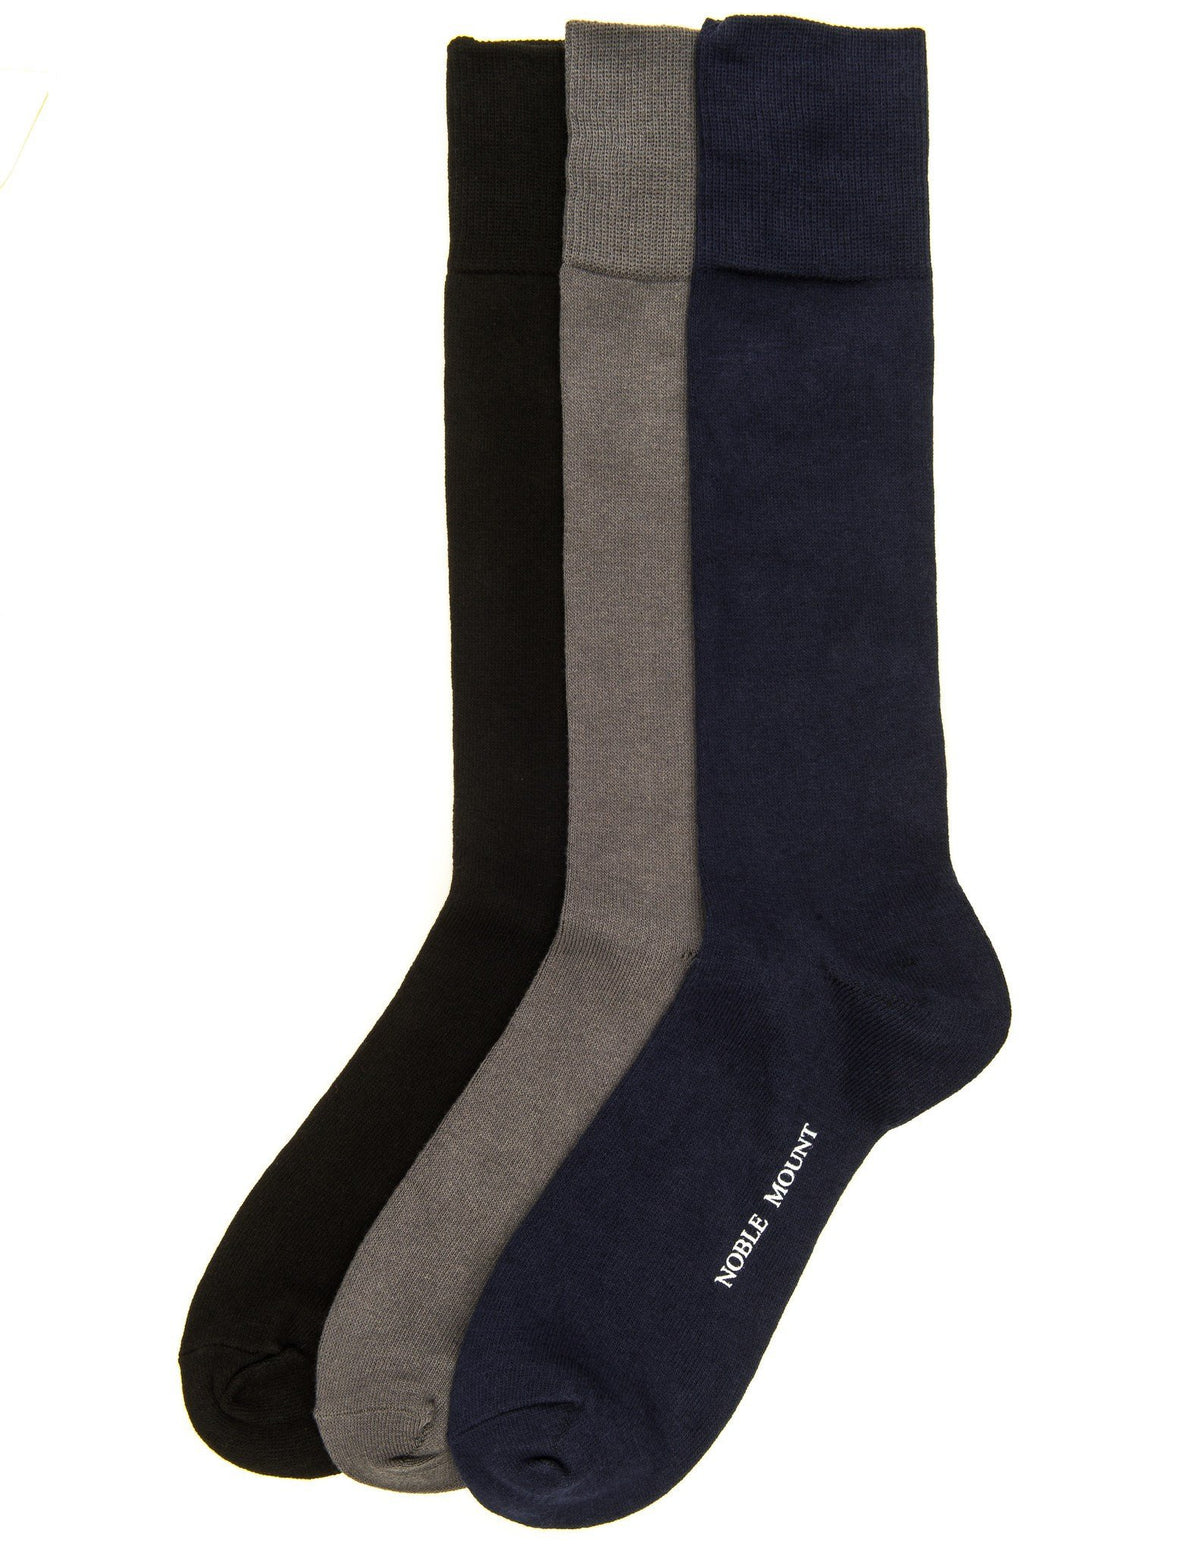 Men's Combed Cotton Dress Socks 3-Pack - Set B5